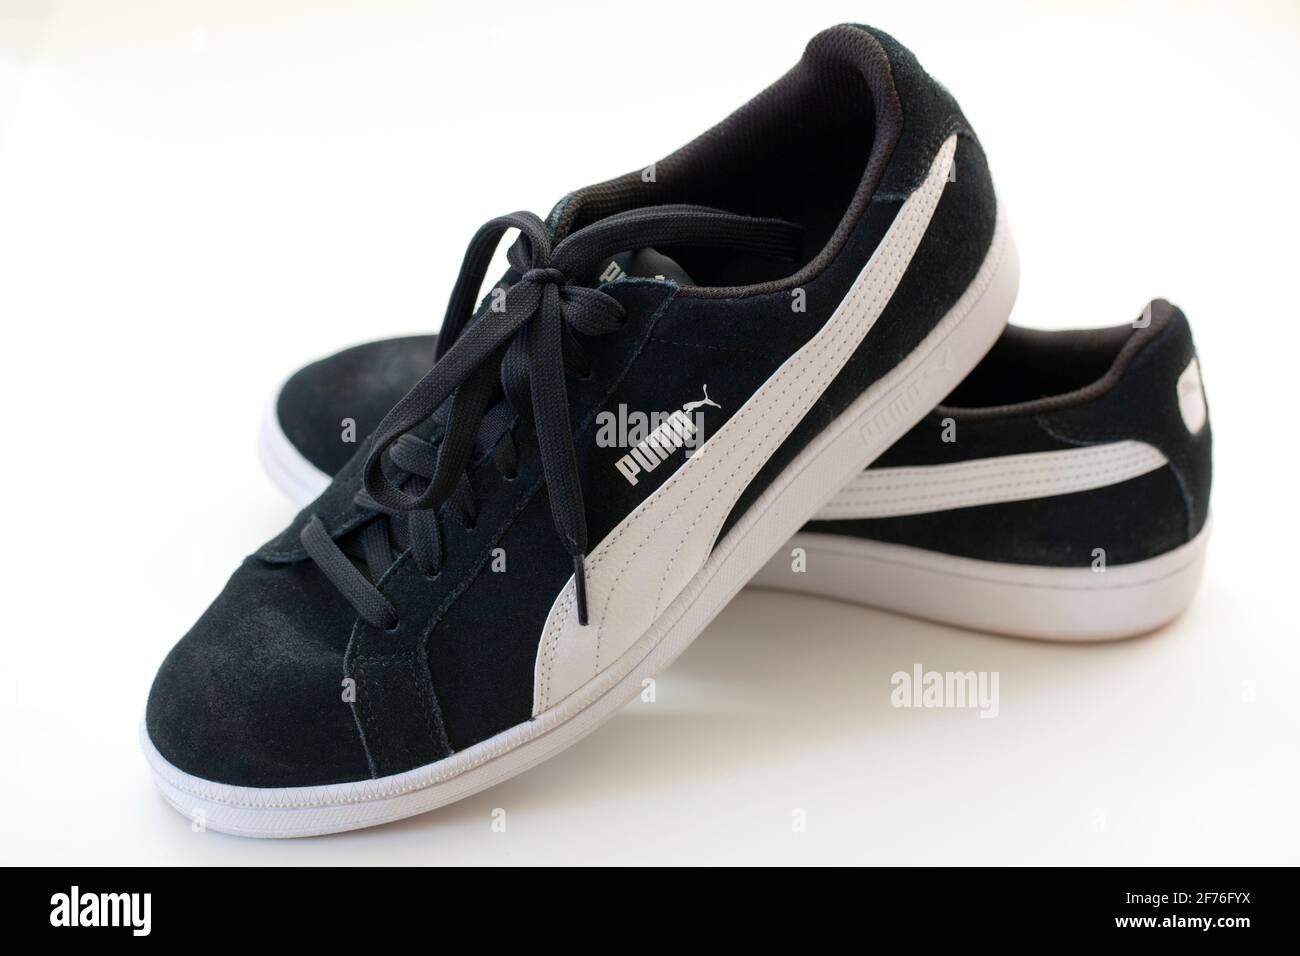 Sneakers Puma Classic en daim noir - Etats-Unis Photo Stock - Alamy